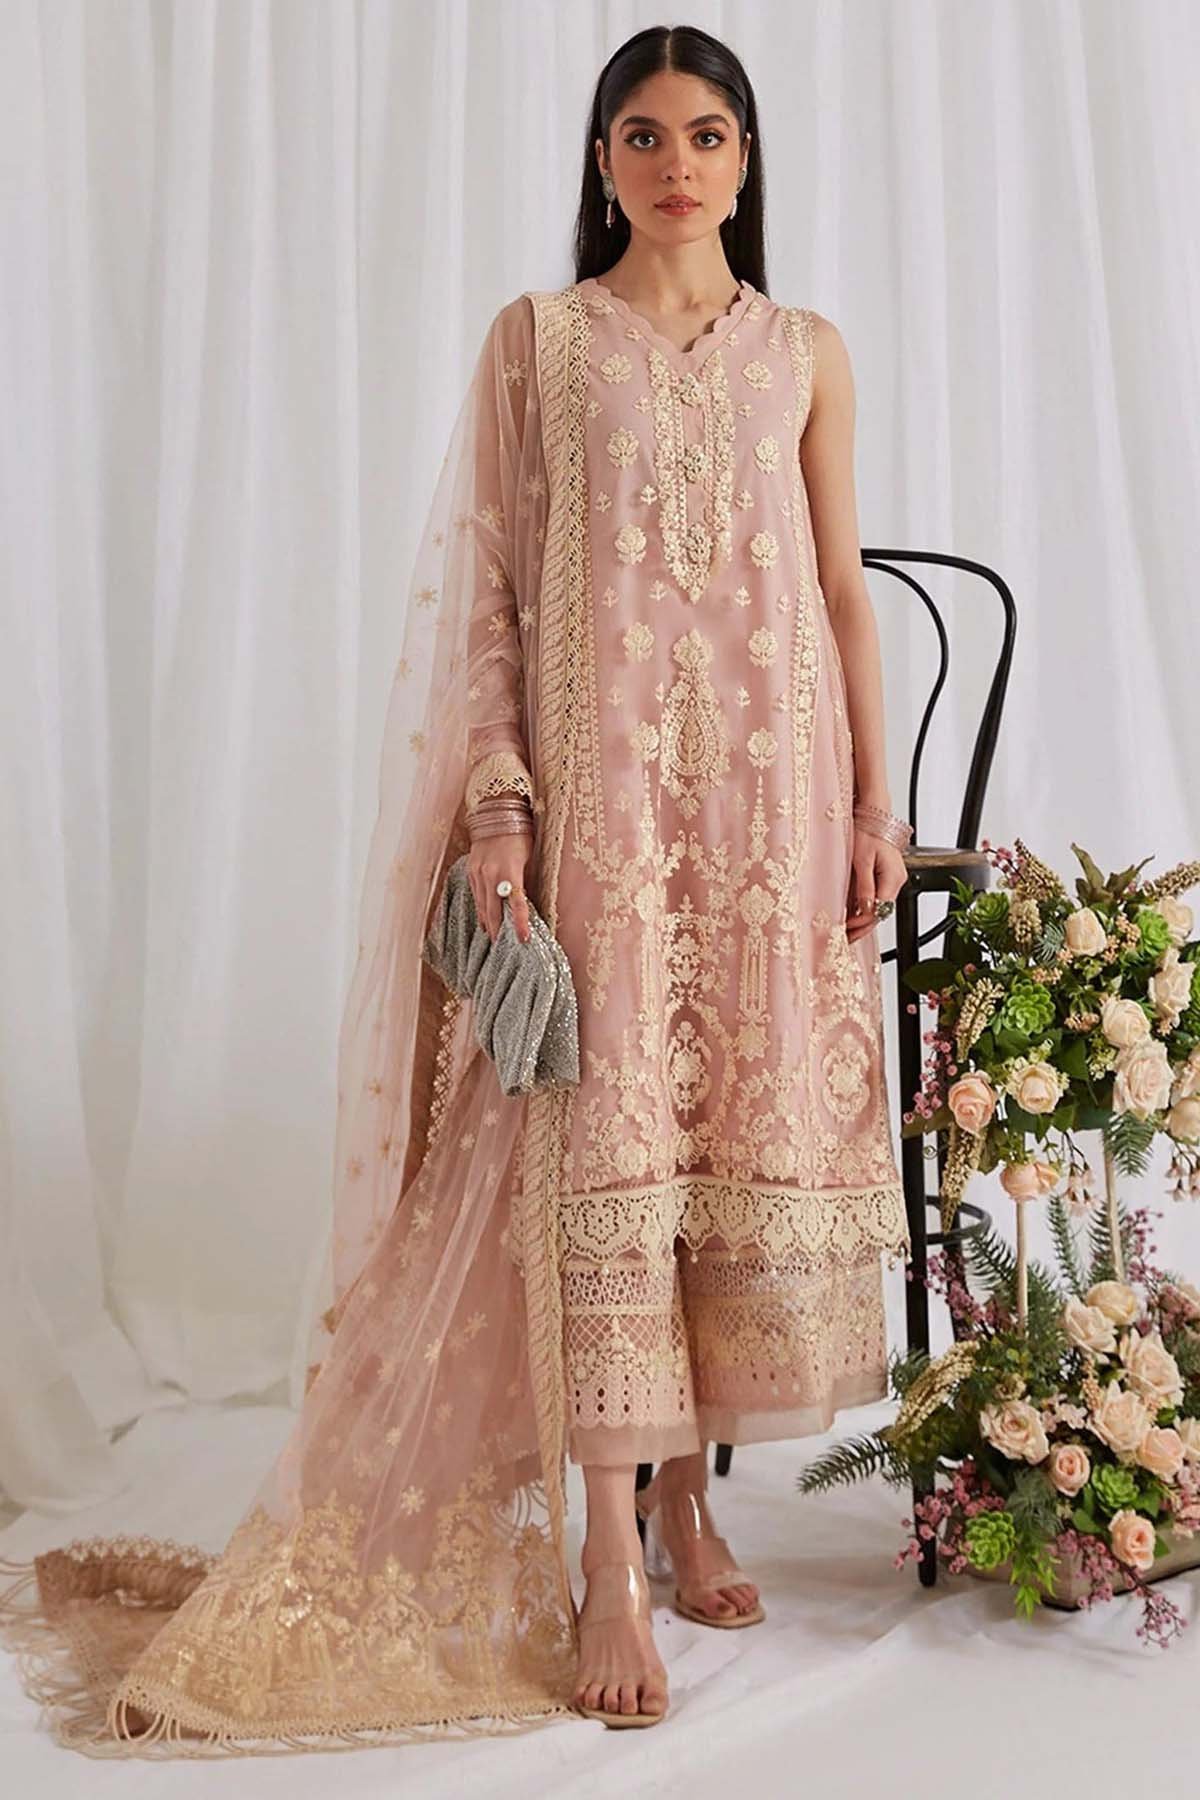 Faiza saqlain women new dress design empires collection pakistan top brand clothing brand fashion 3 piece suit